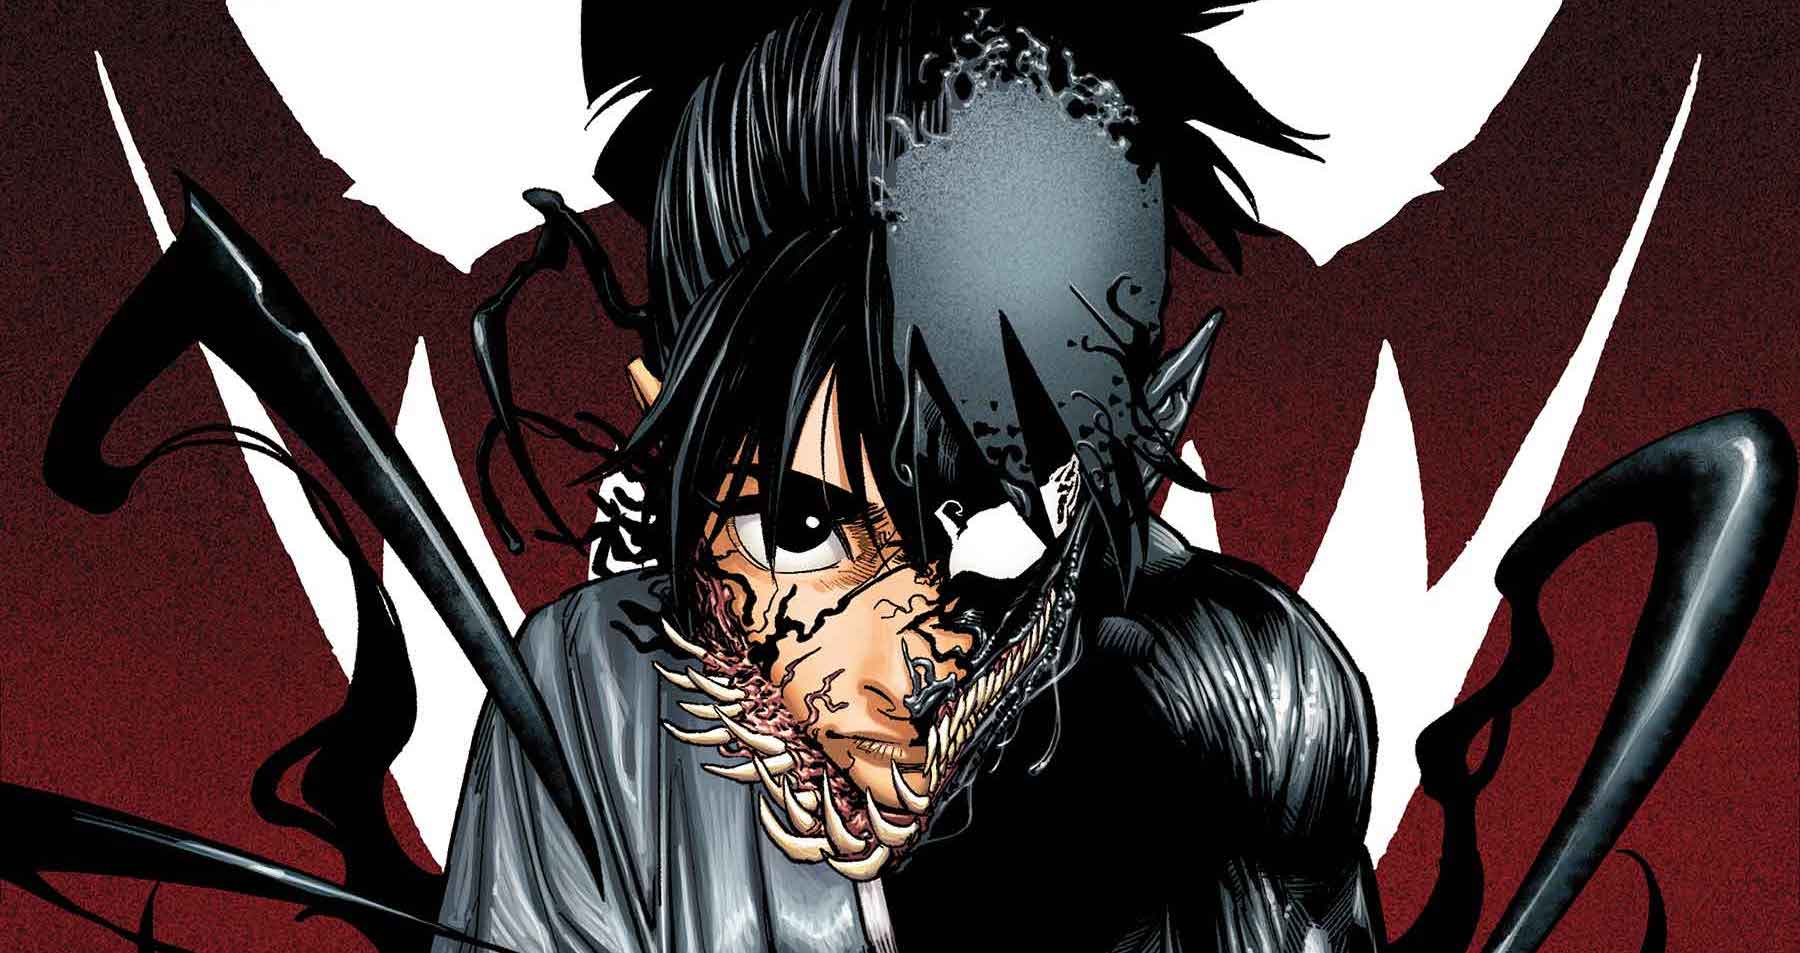 'Kid Venom: Origins' #1 will appeal to manga fans